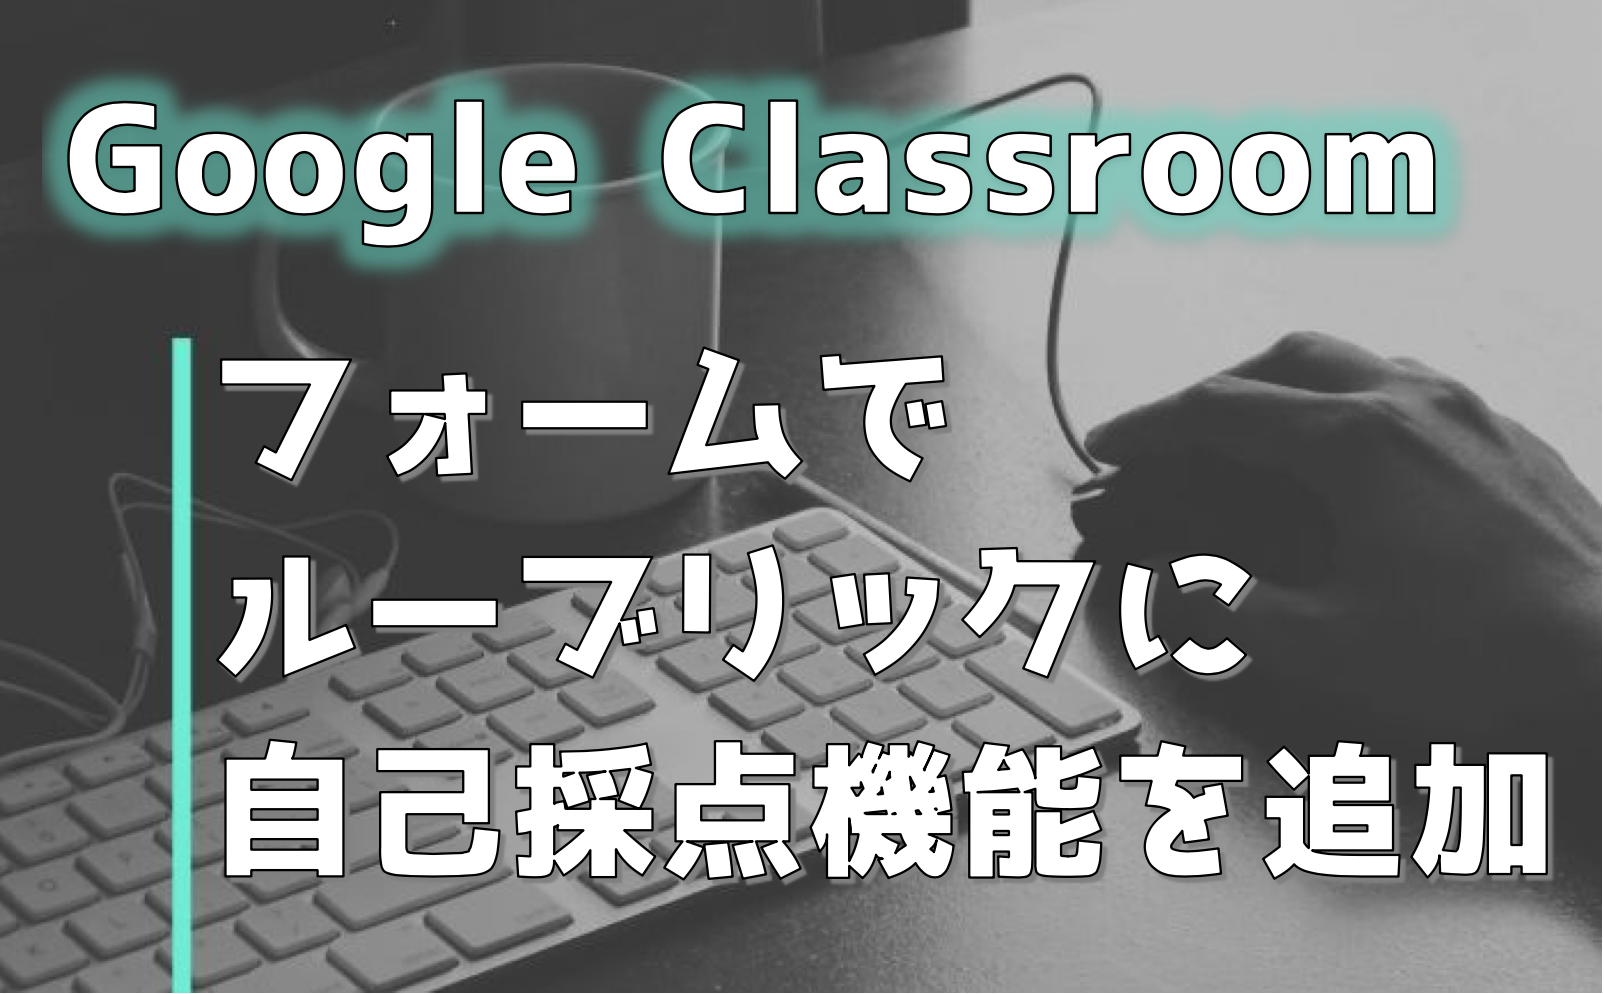 【Google Classroom】自己採点を提出させる方法・フォームを活用